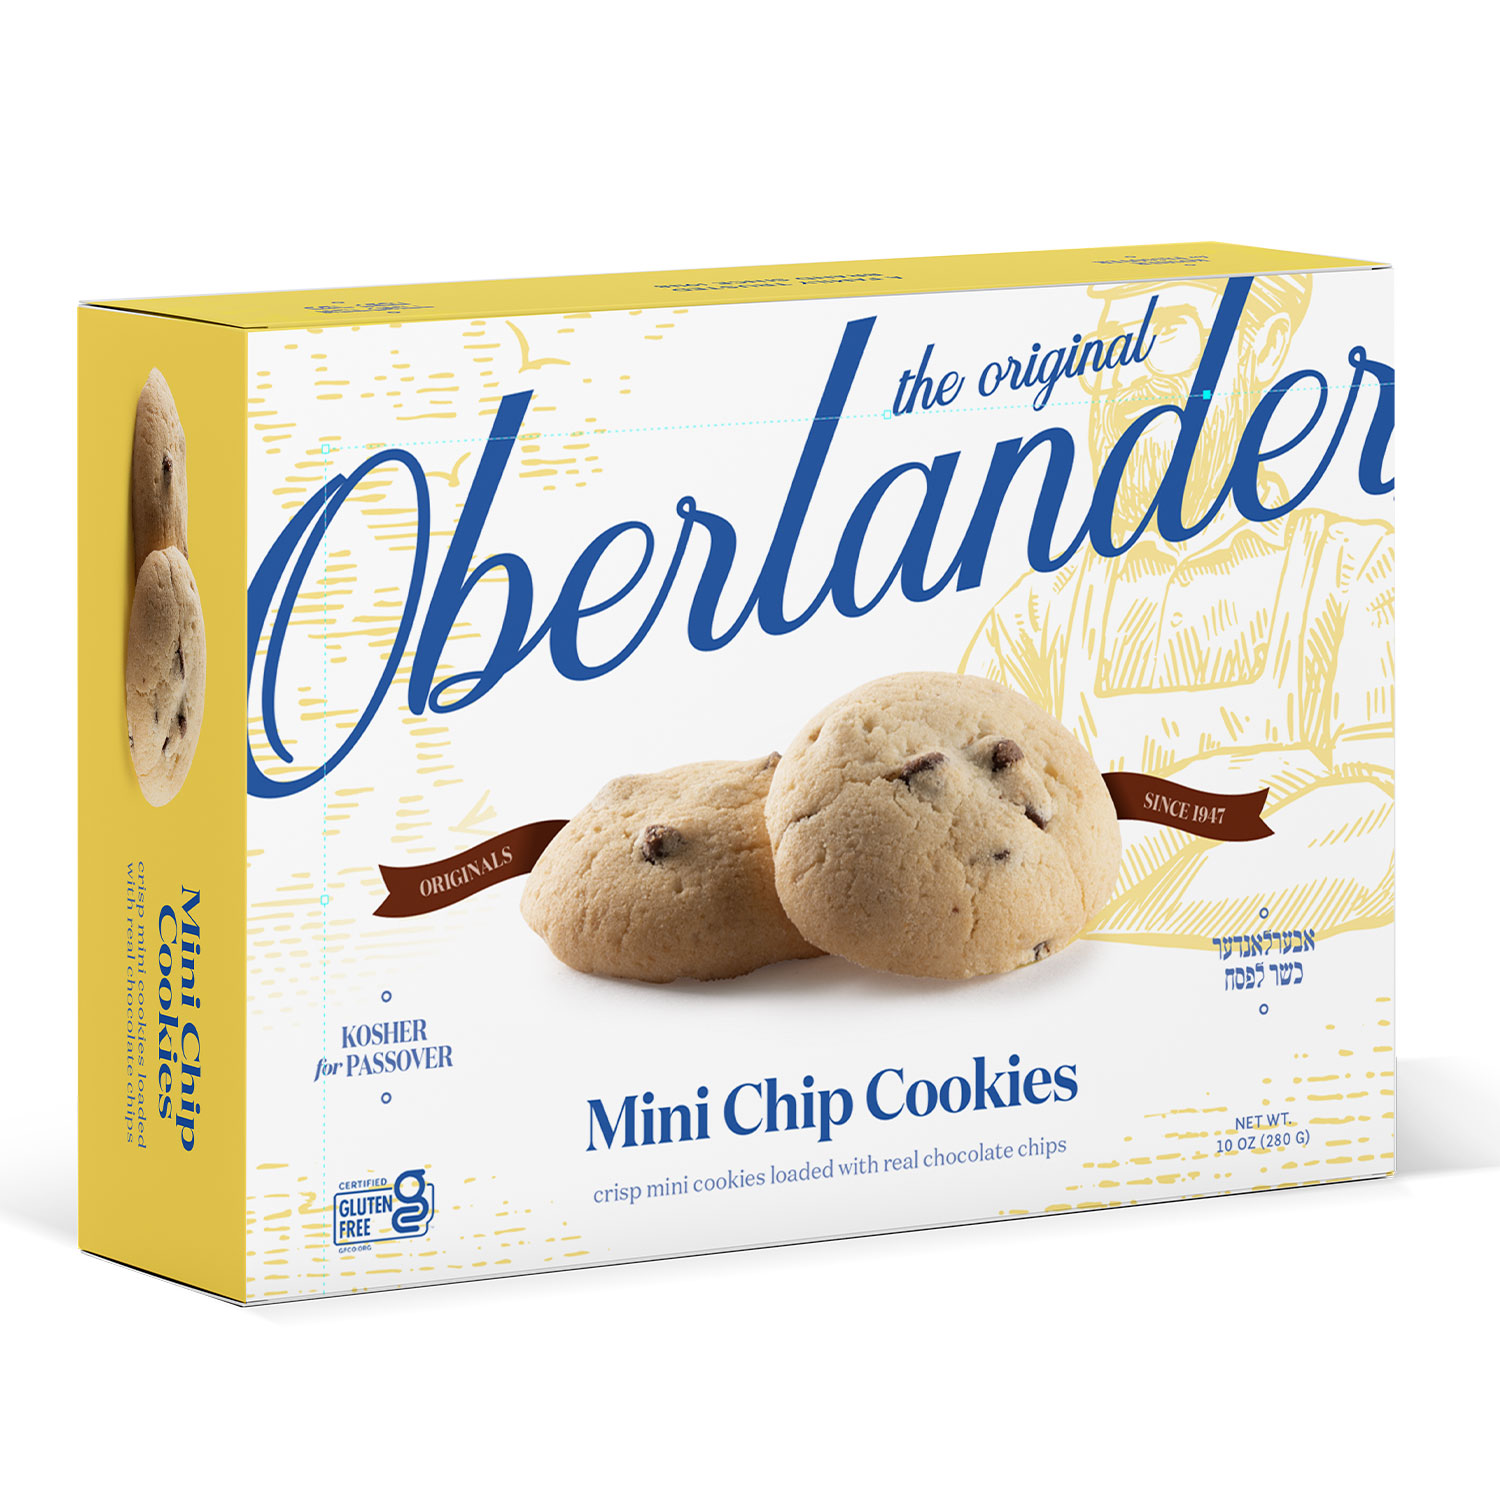 OBERLANDER MINI CHOCOLATE CHIP COOKIES